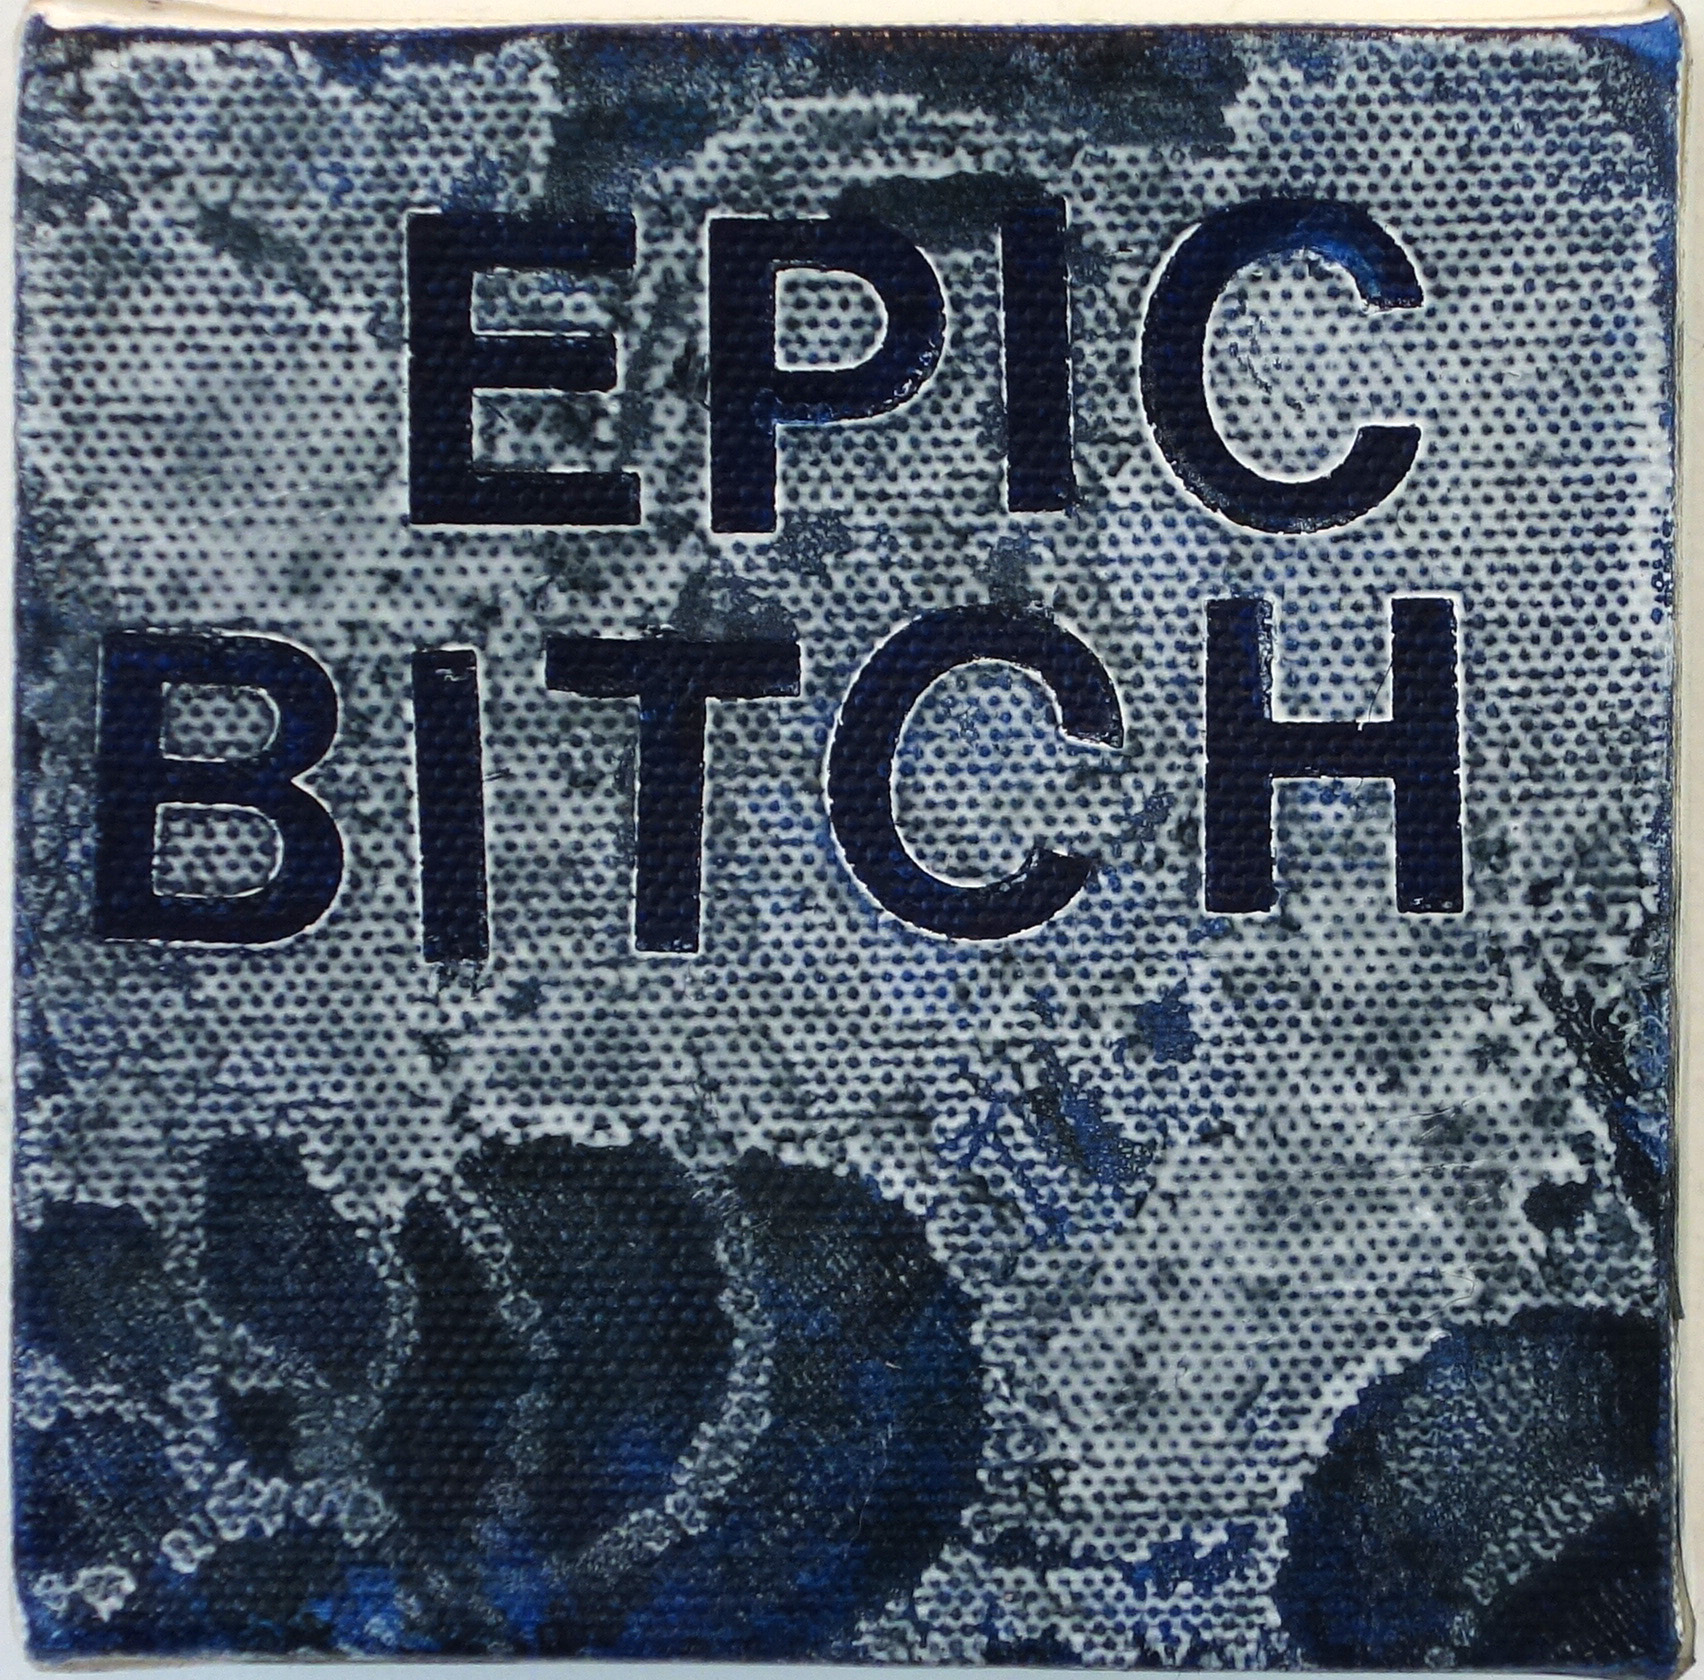 epic bitch 4x4%22 2015.jpg